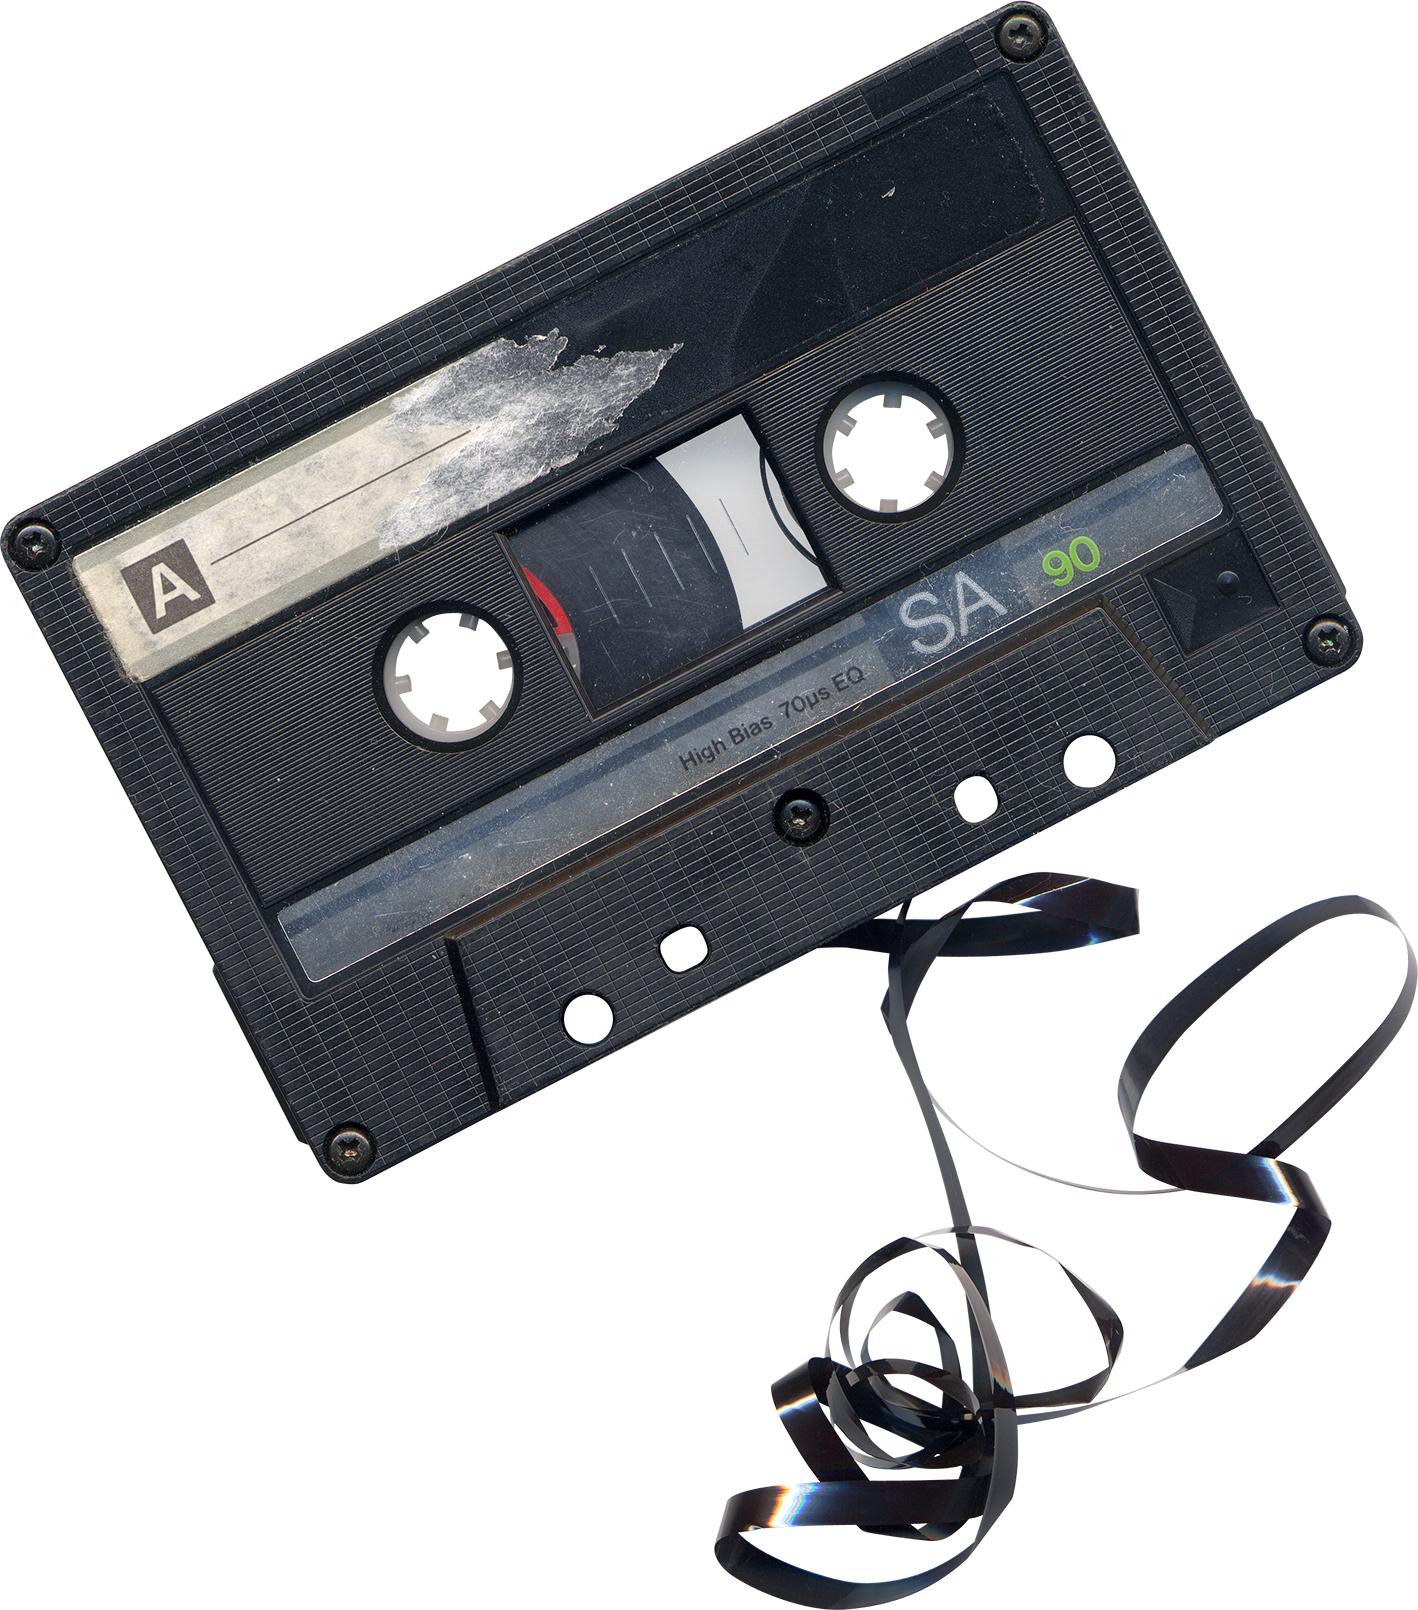 File:Cassette audio 2017 001.jpg - Wikimedia Commons